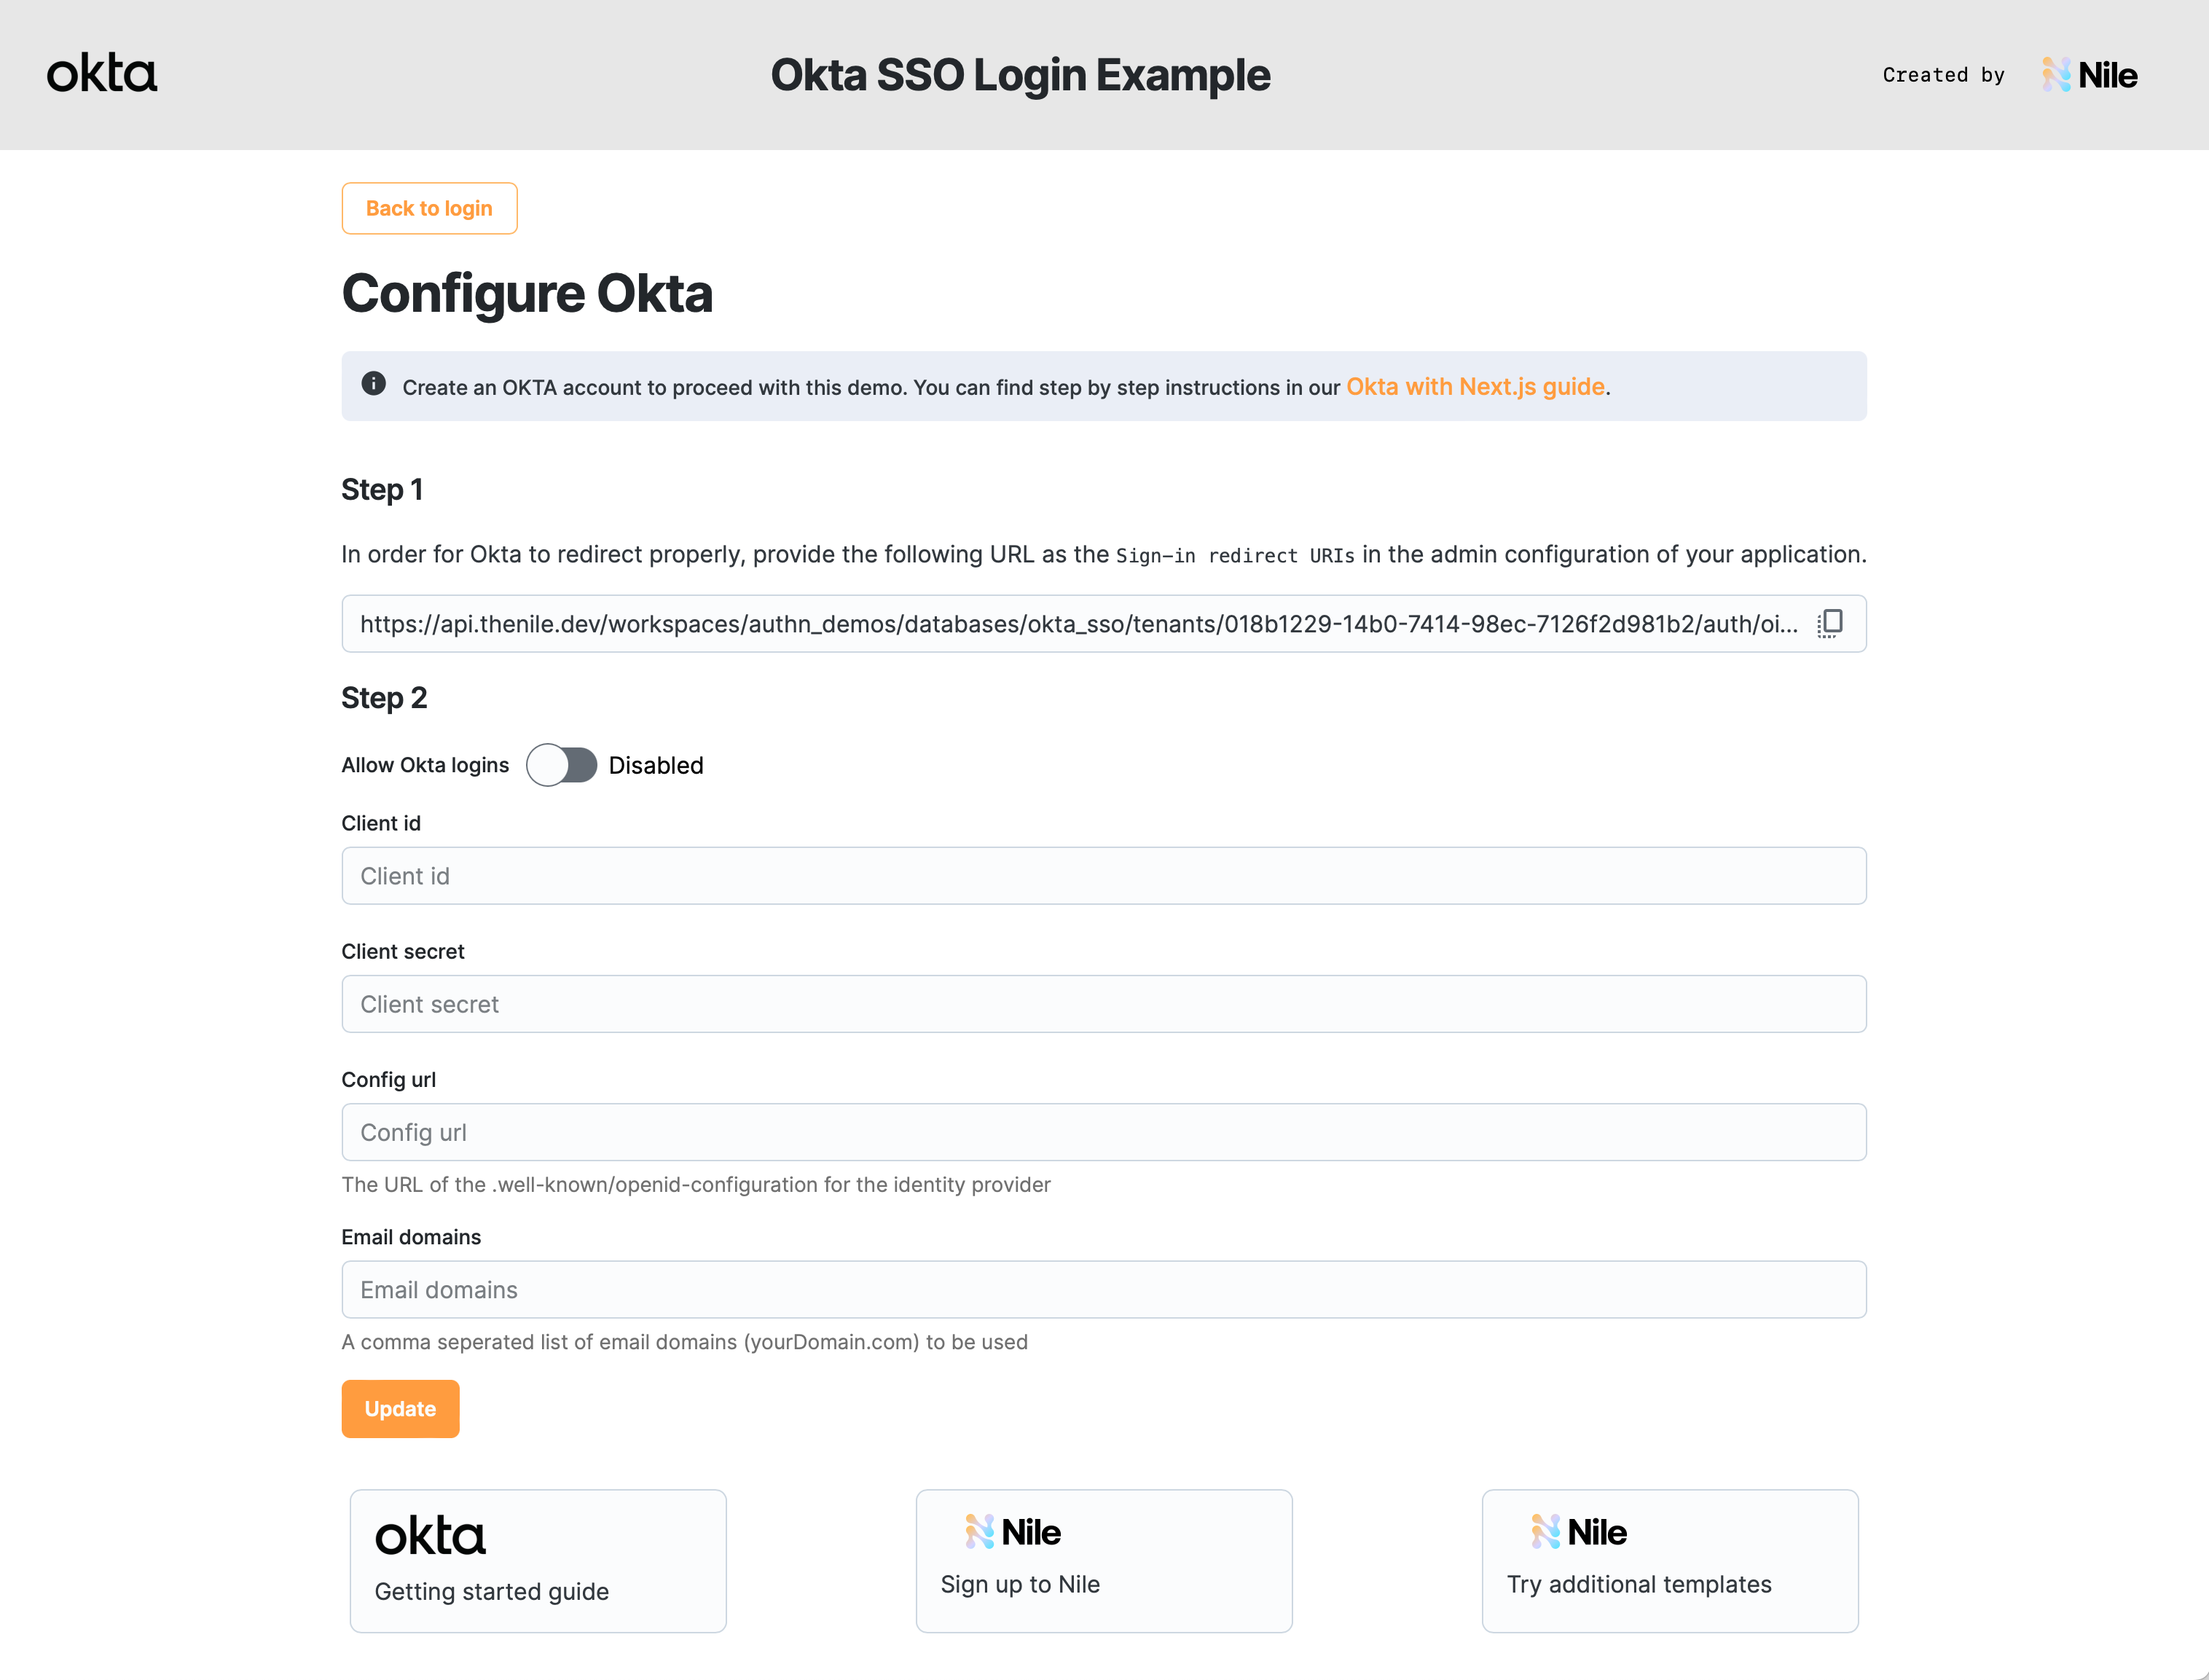 screen shot for SSO Login for multi-tenant application with Okta template